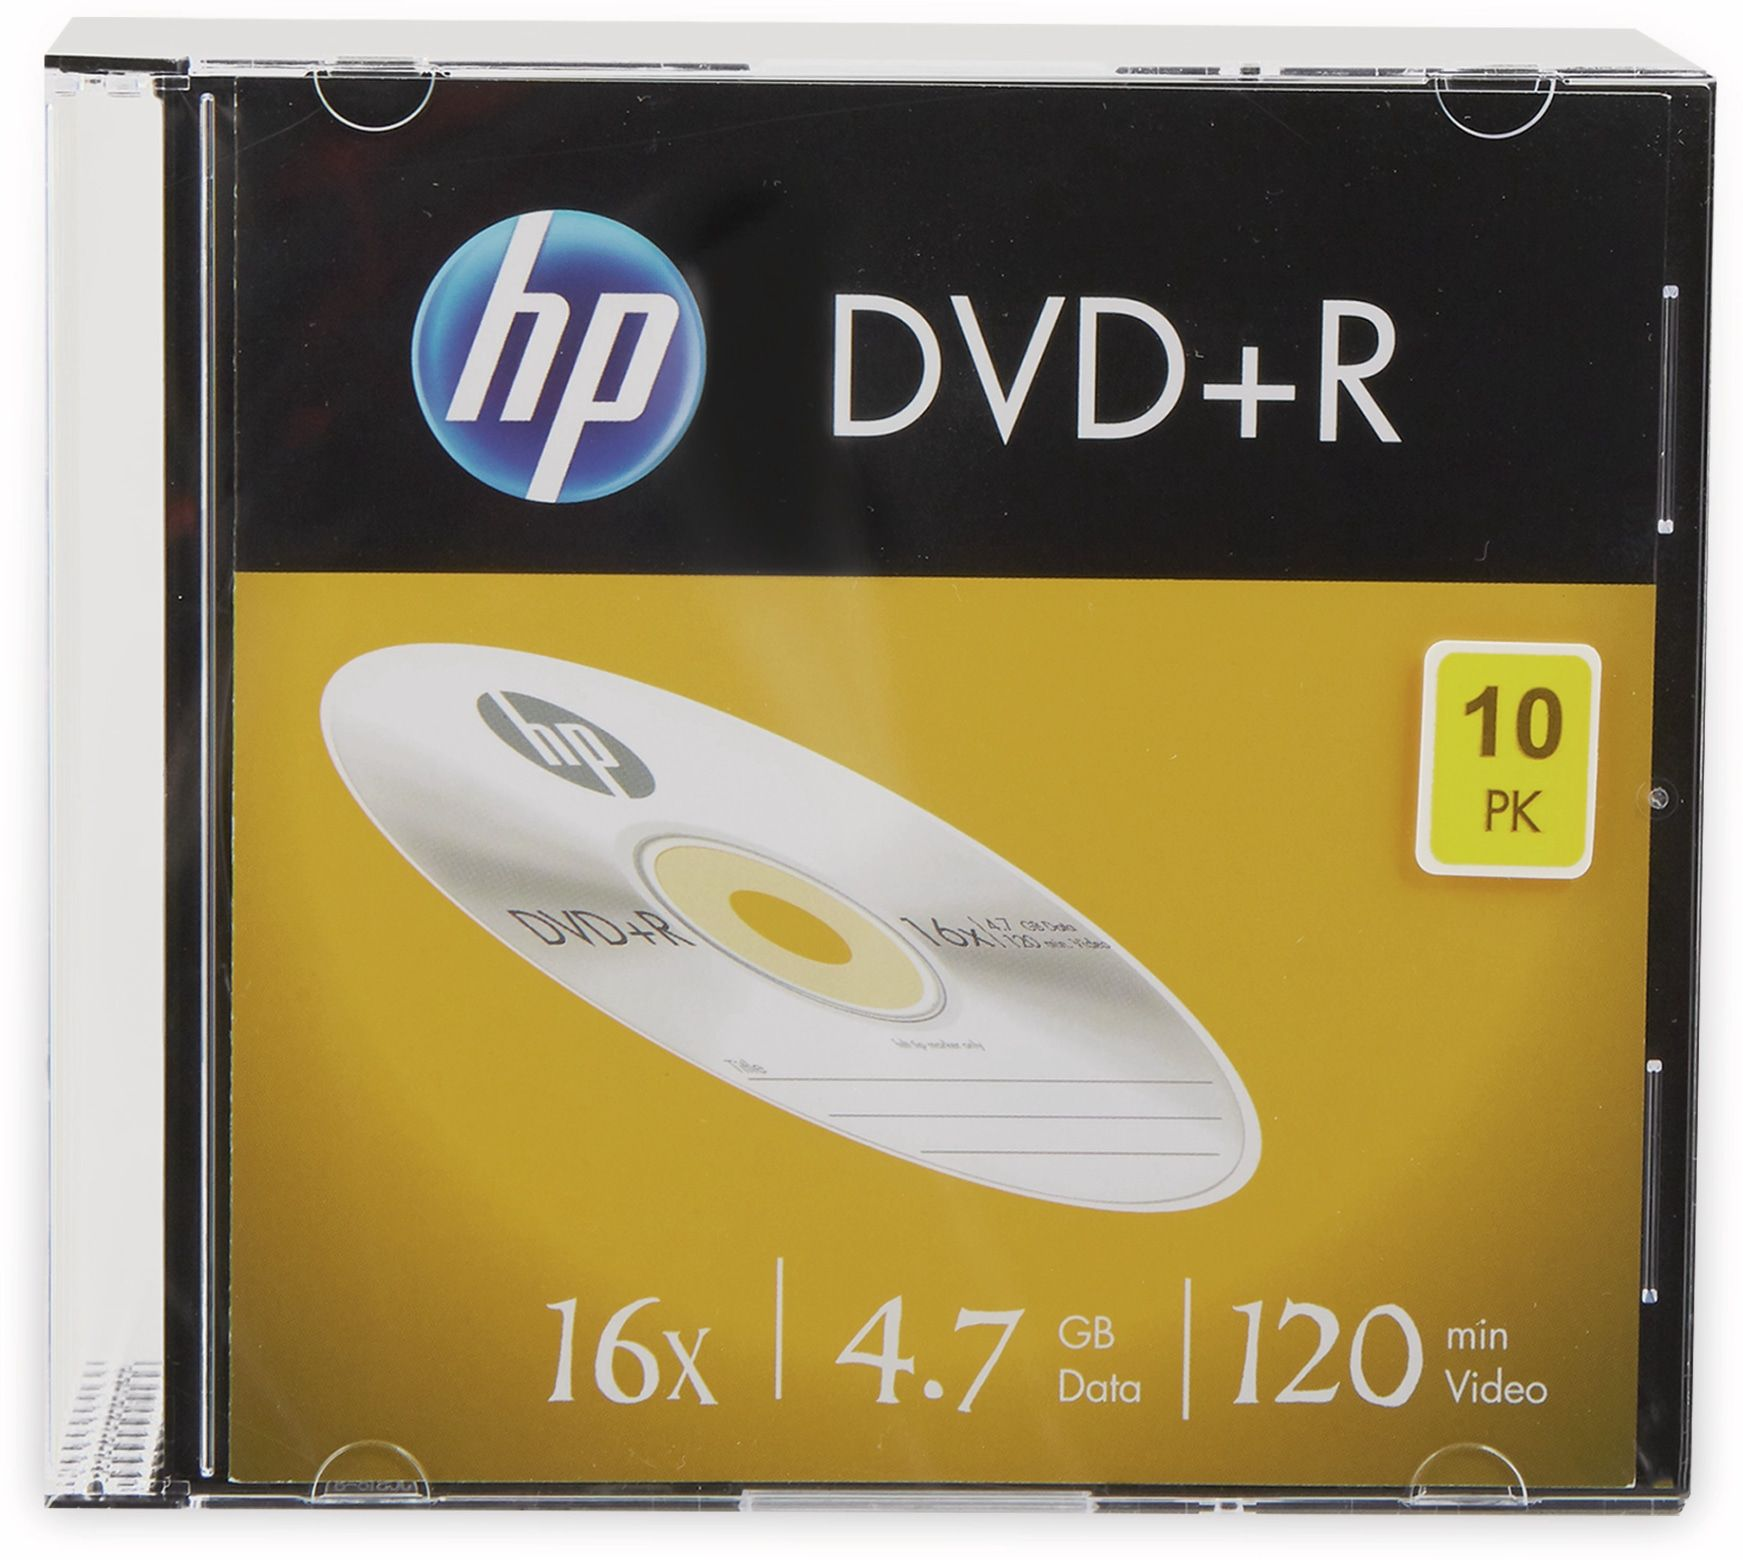 CDs DVD+R 10 120Min, HP 4.7GB, 16x, DVD+R Slimcase,